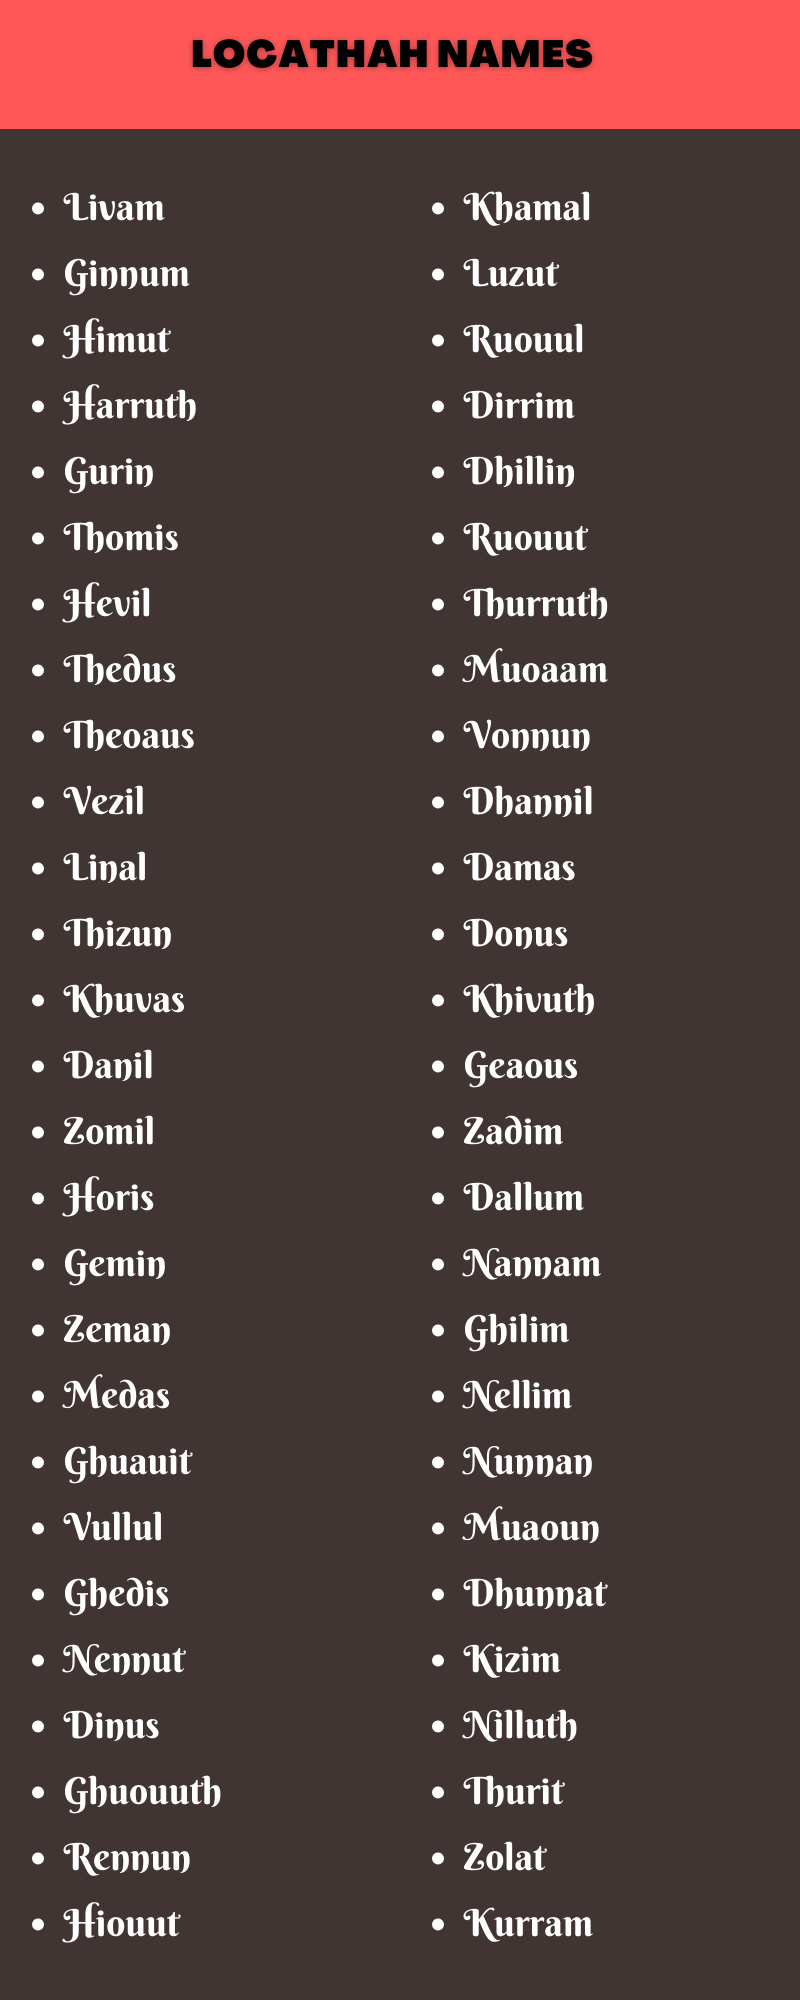 Locathah Names